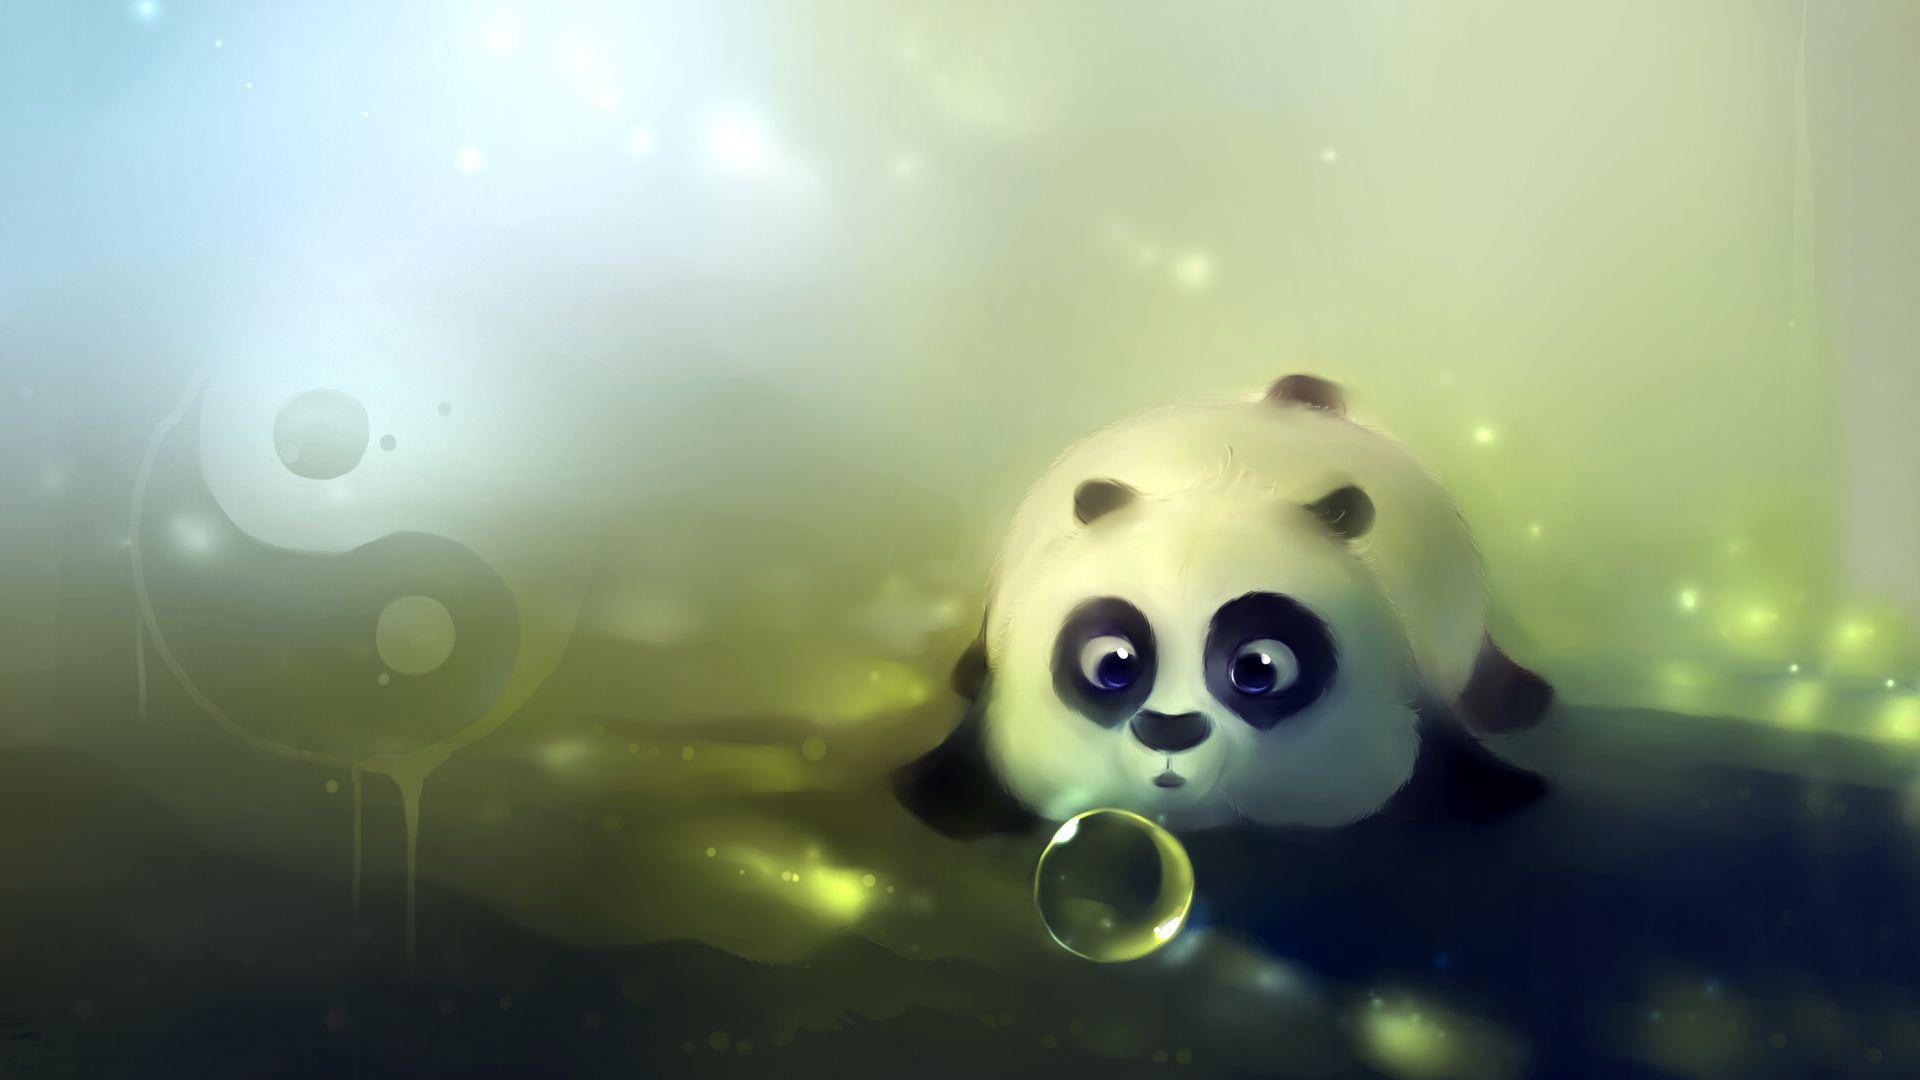 Wallpaper For > Background For Twitter Cute Panda